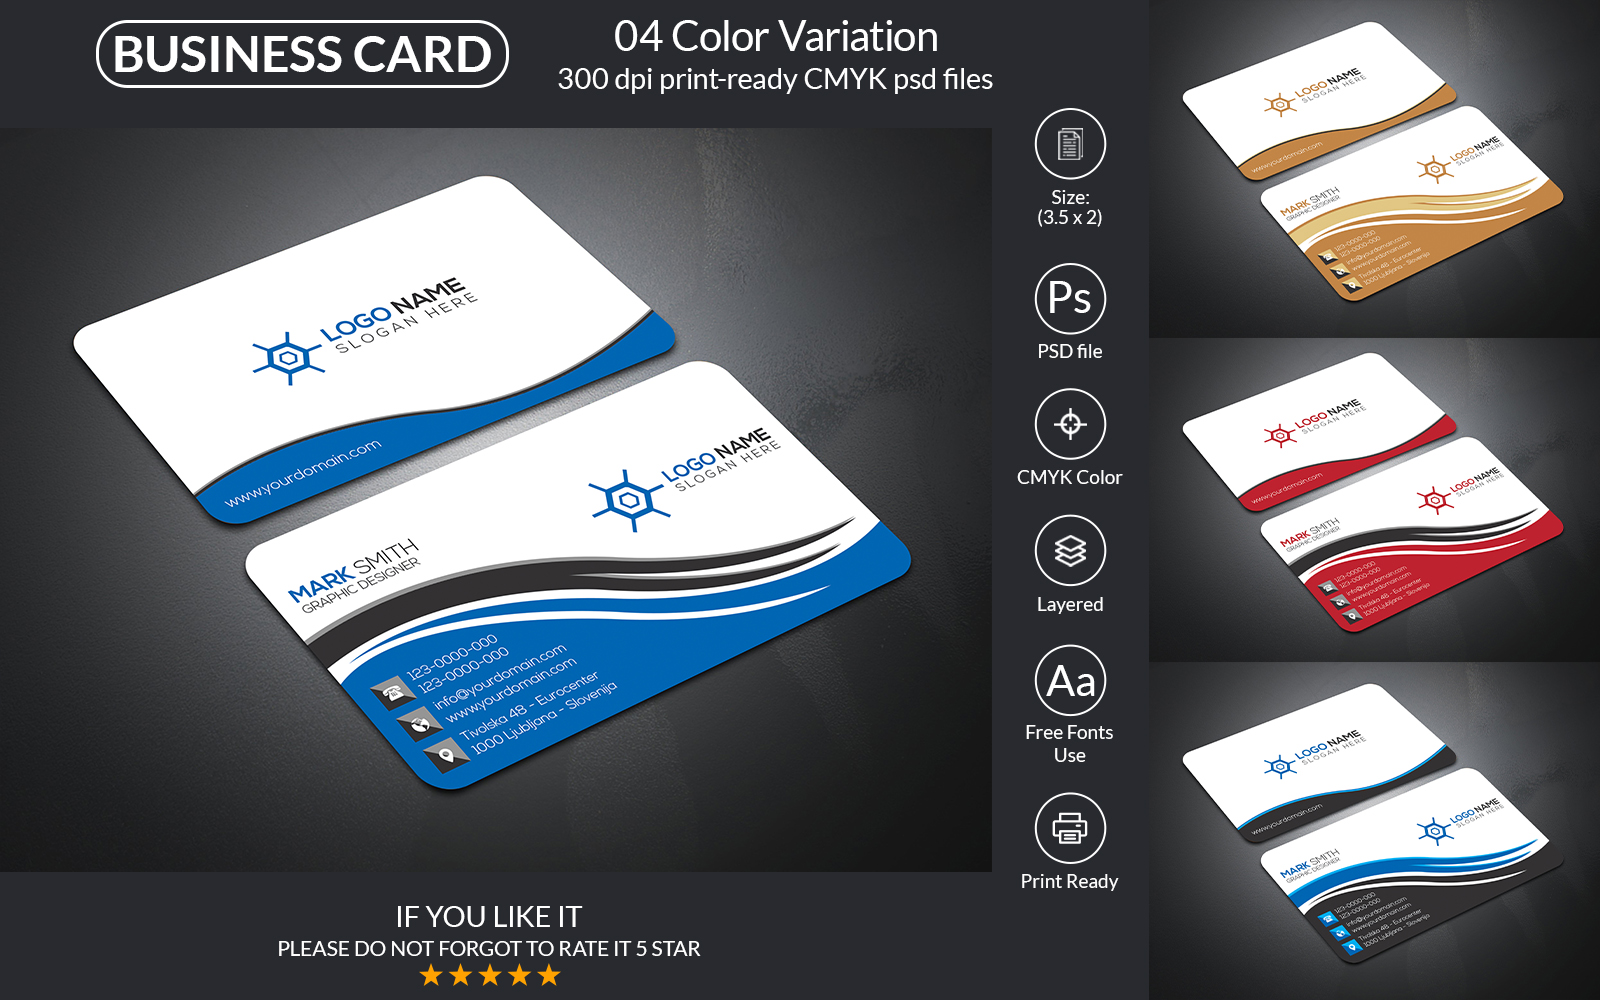 Business Card Design - Corporate Identity Template v1